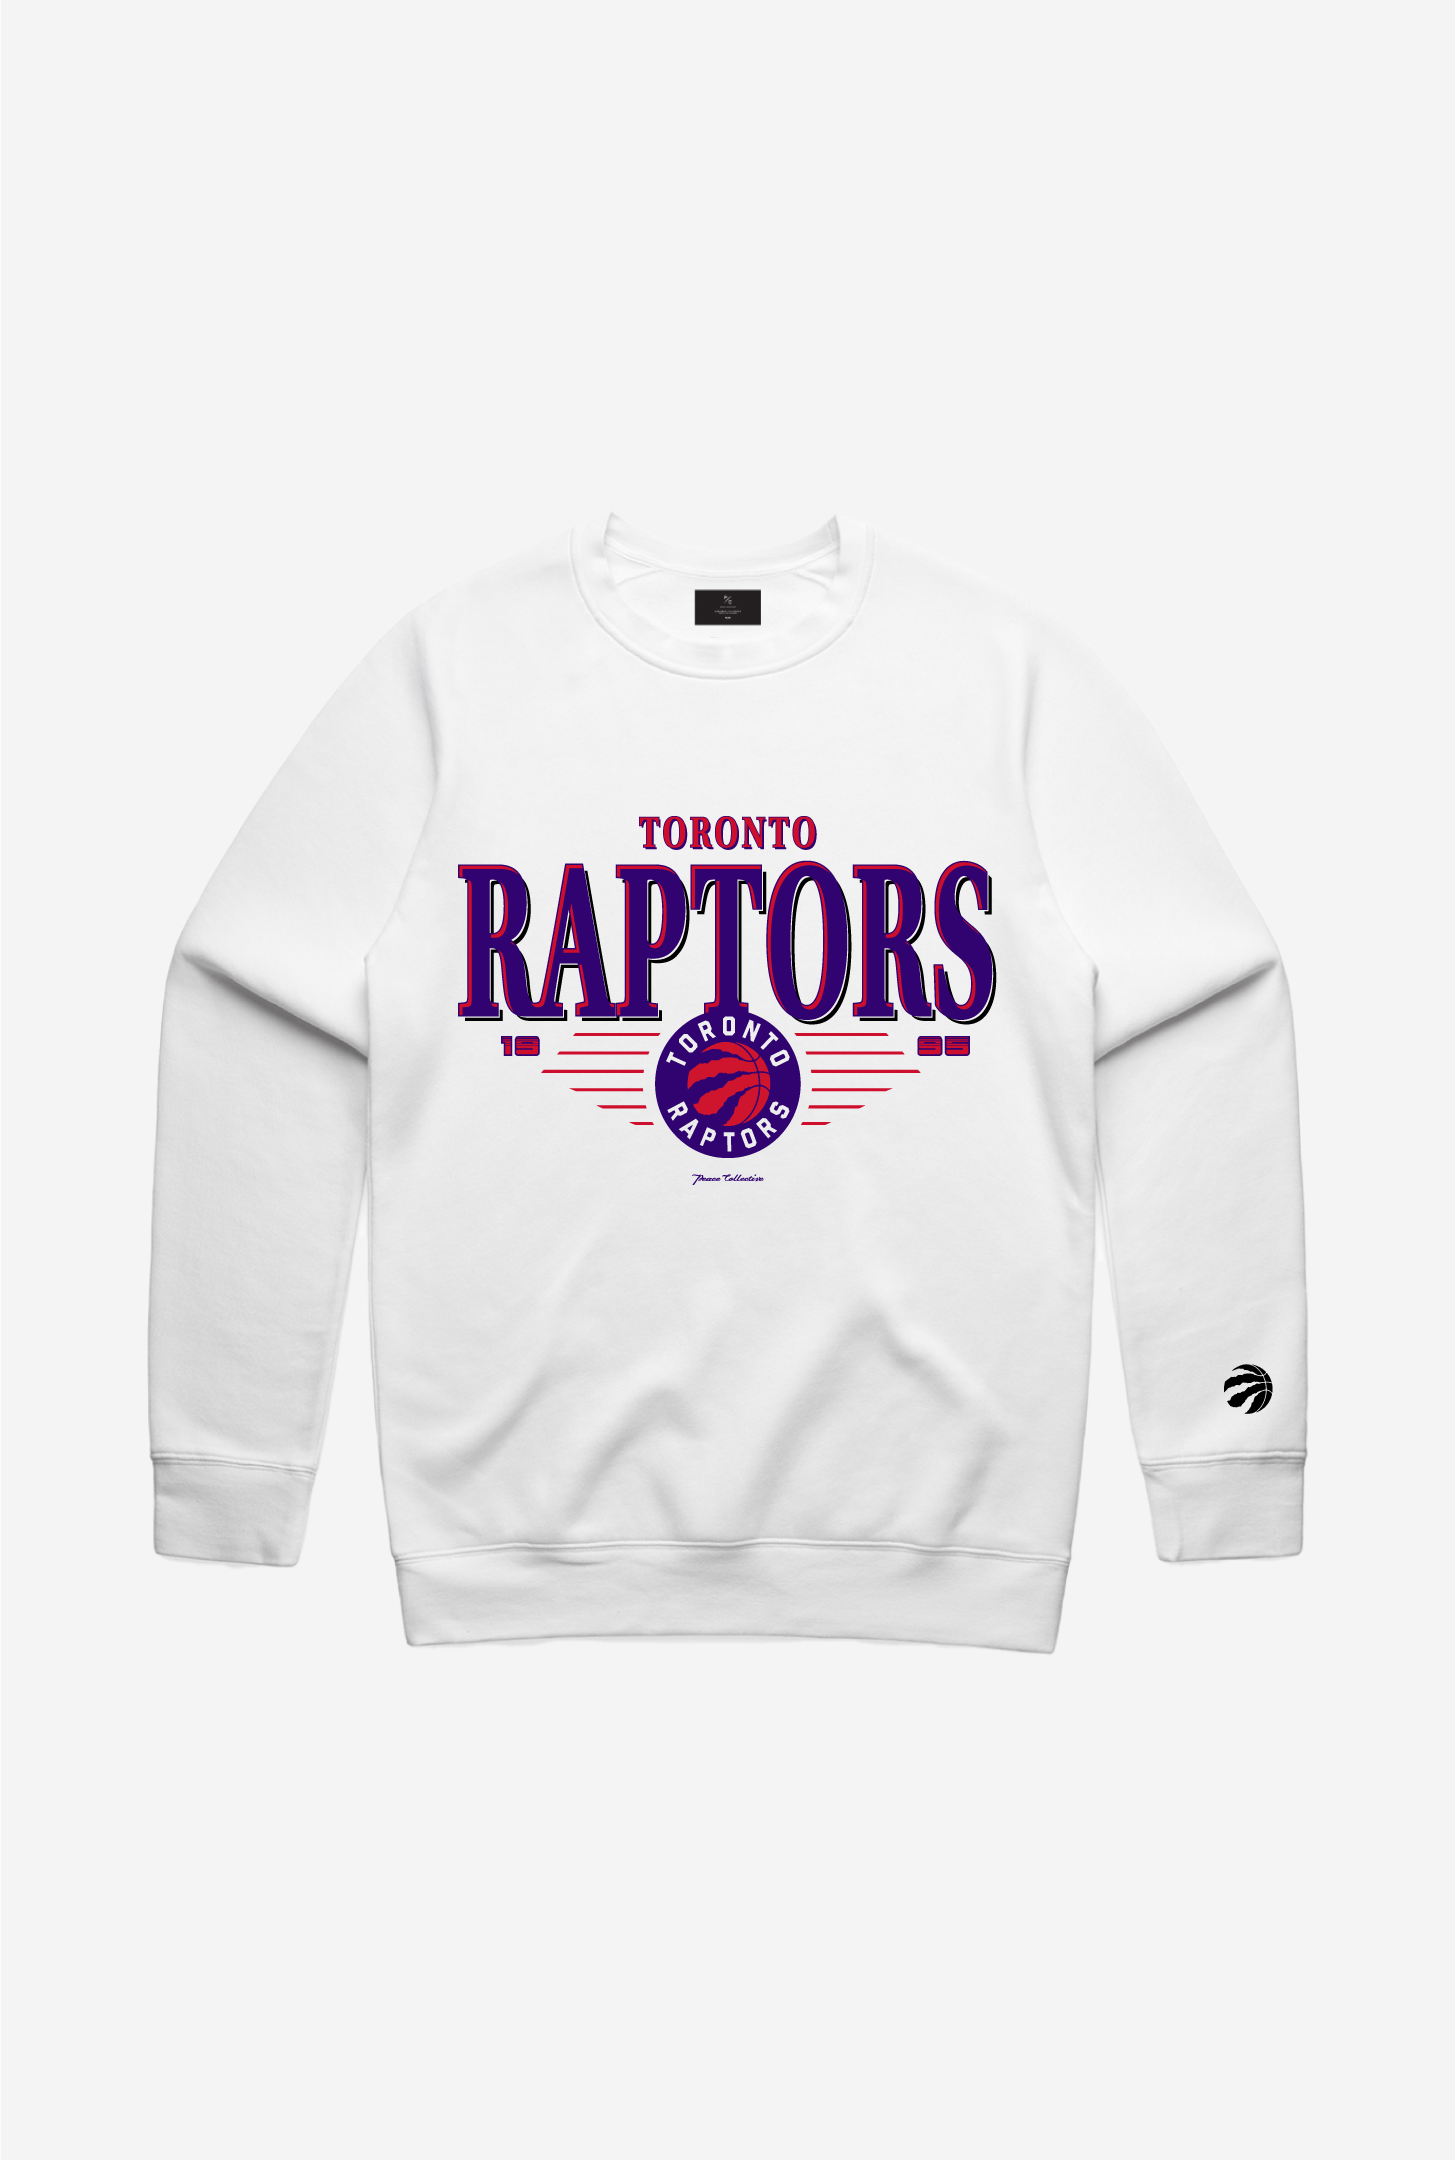 Toronto Raptors Signature Crewneck - White